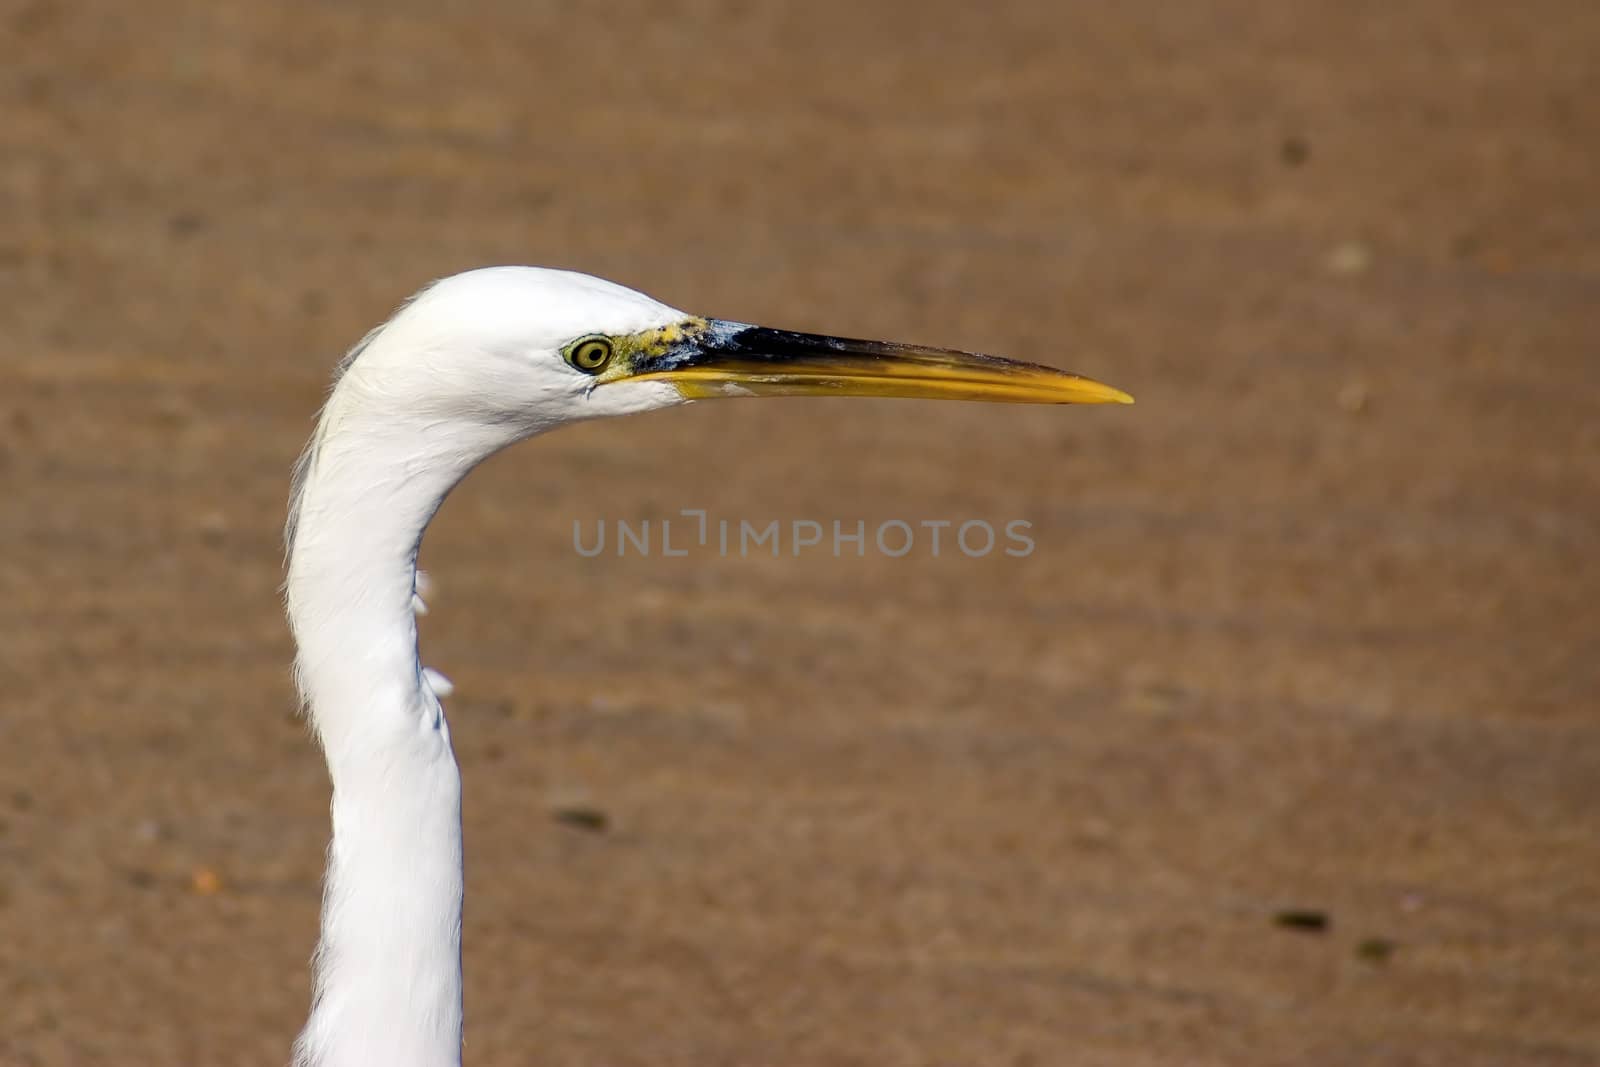 Heron walking on a beach, close-up